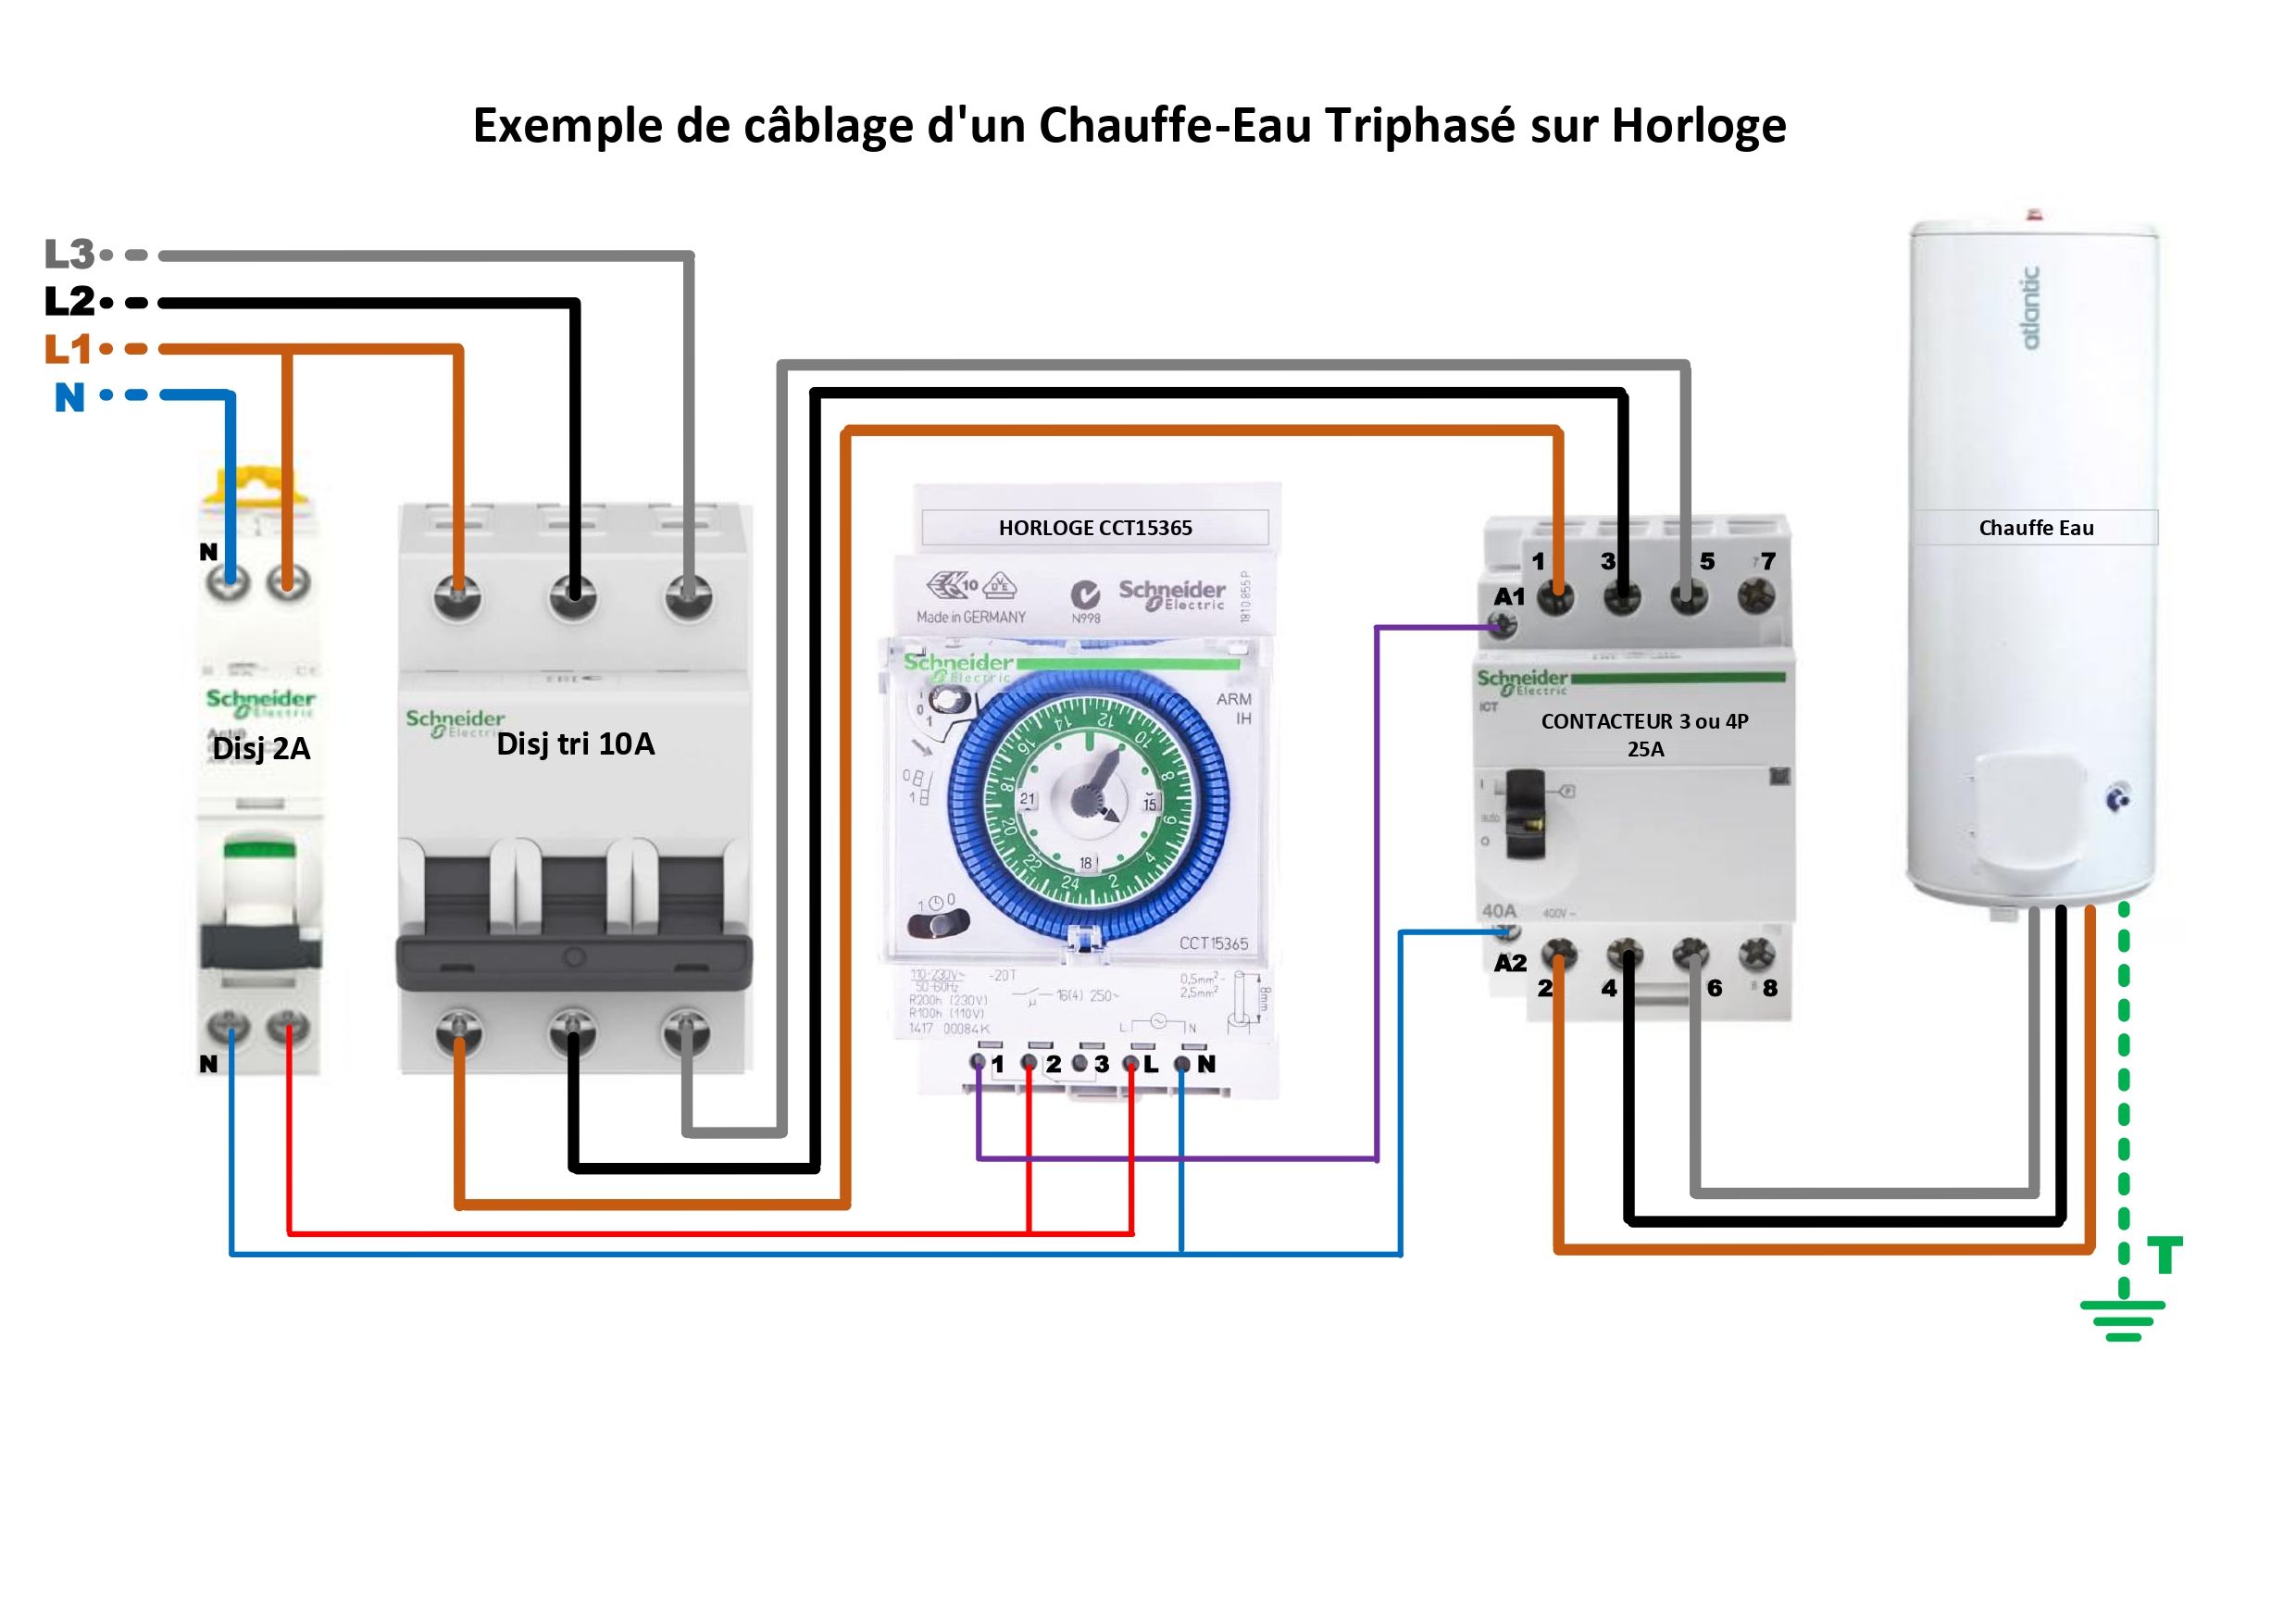 schema-cablage-chauffe-eau-triphase-horloge-modulaire-cct15365